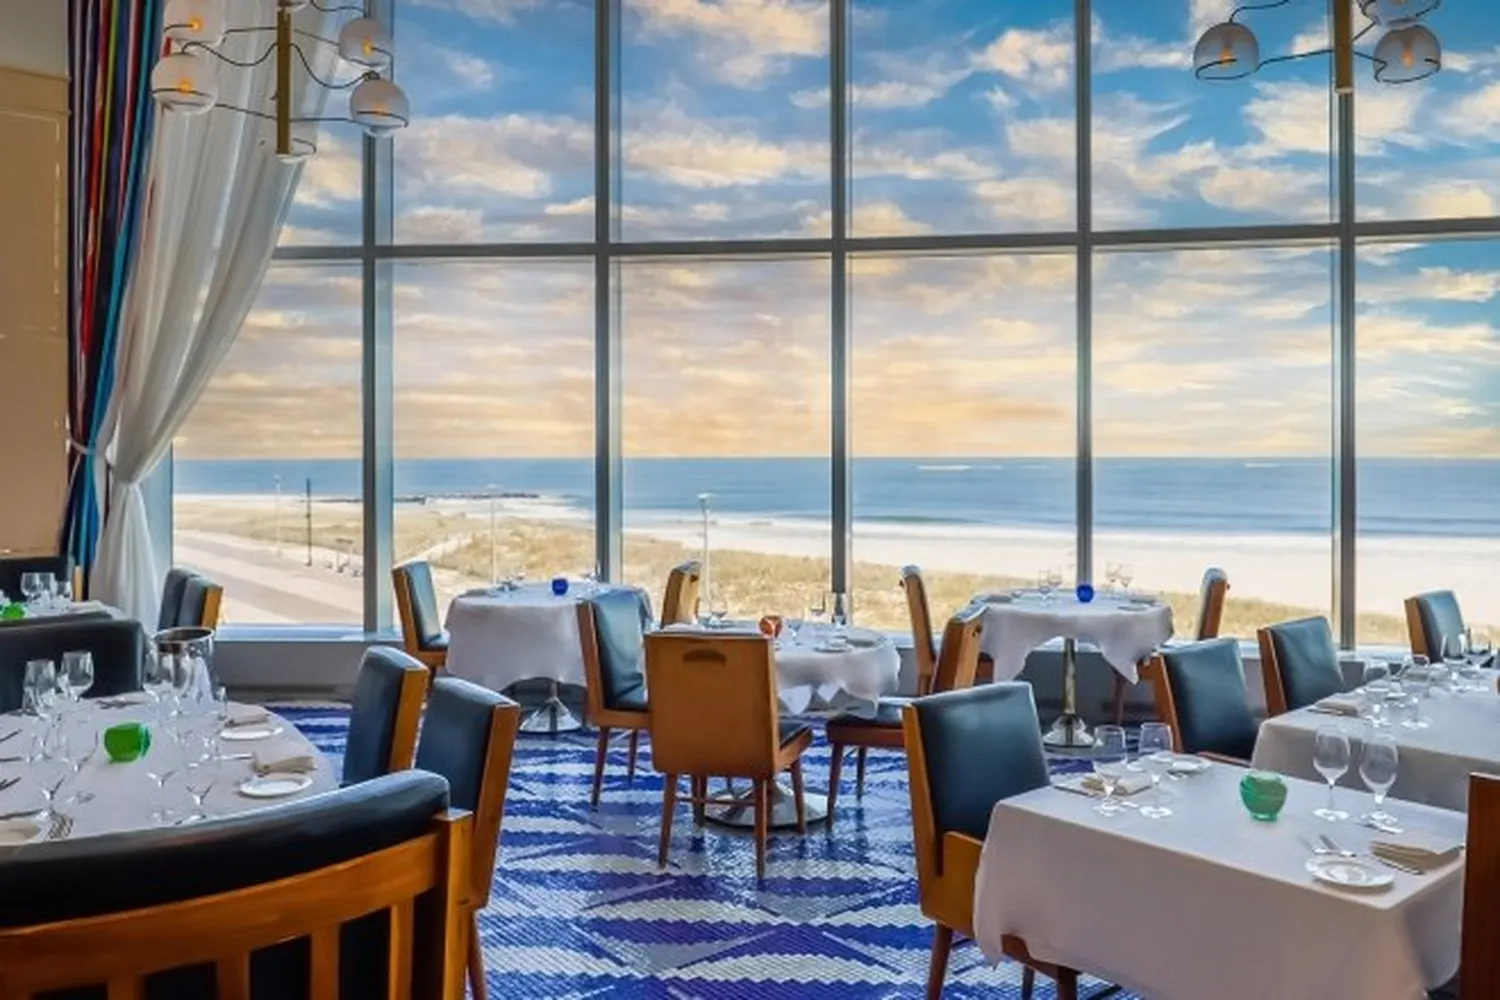 Reservation at OCEAN STEAK restaurant Atlantic City KEYS